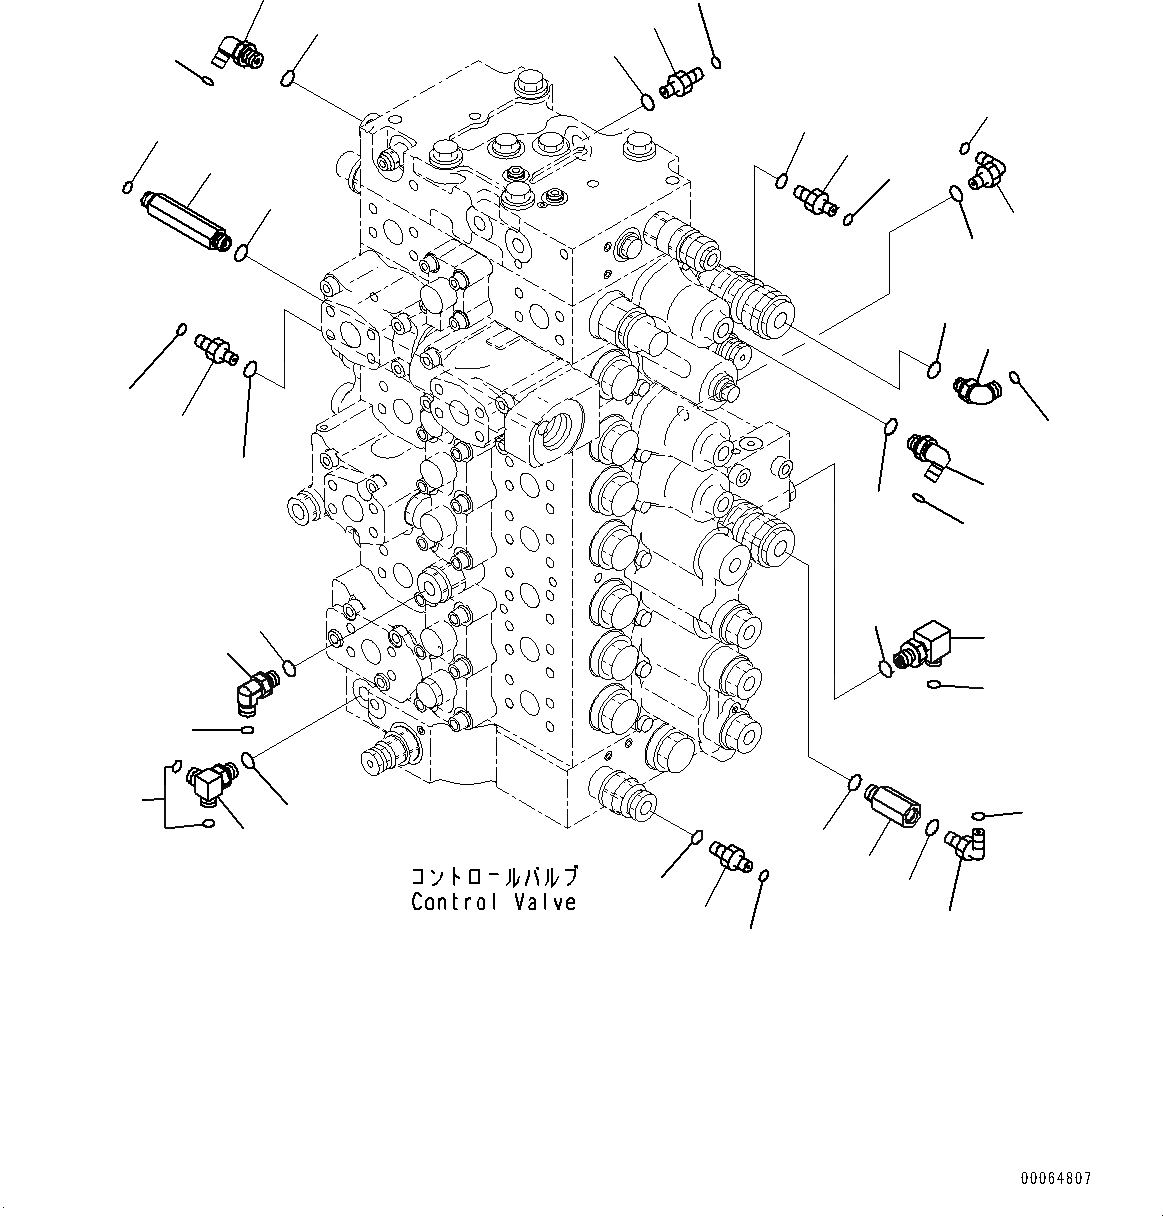 Схема запчастей Komatsu PC450LC-8 - УПРАВЛЯЮЩ. КЛАПАН, УПРАВЛЯЮЩ. КЛАПАН КОМПОНЕНТЫ (/) (№7-7) УПРАВЛЯЮЩ. КЛАПАН, -СЕРВИСНЫЙ КЛАПАН